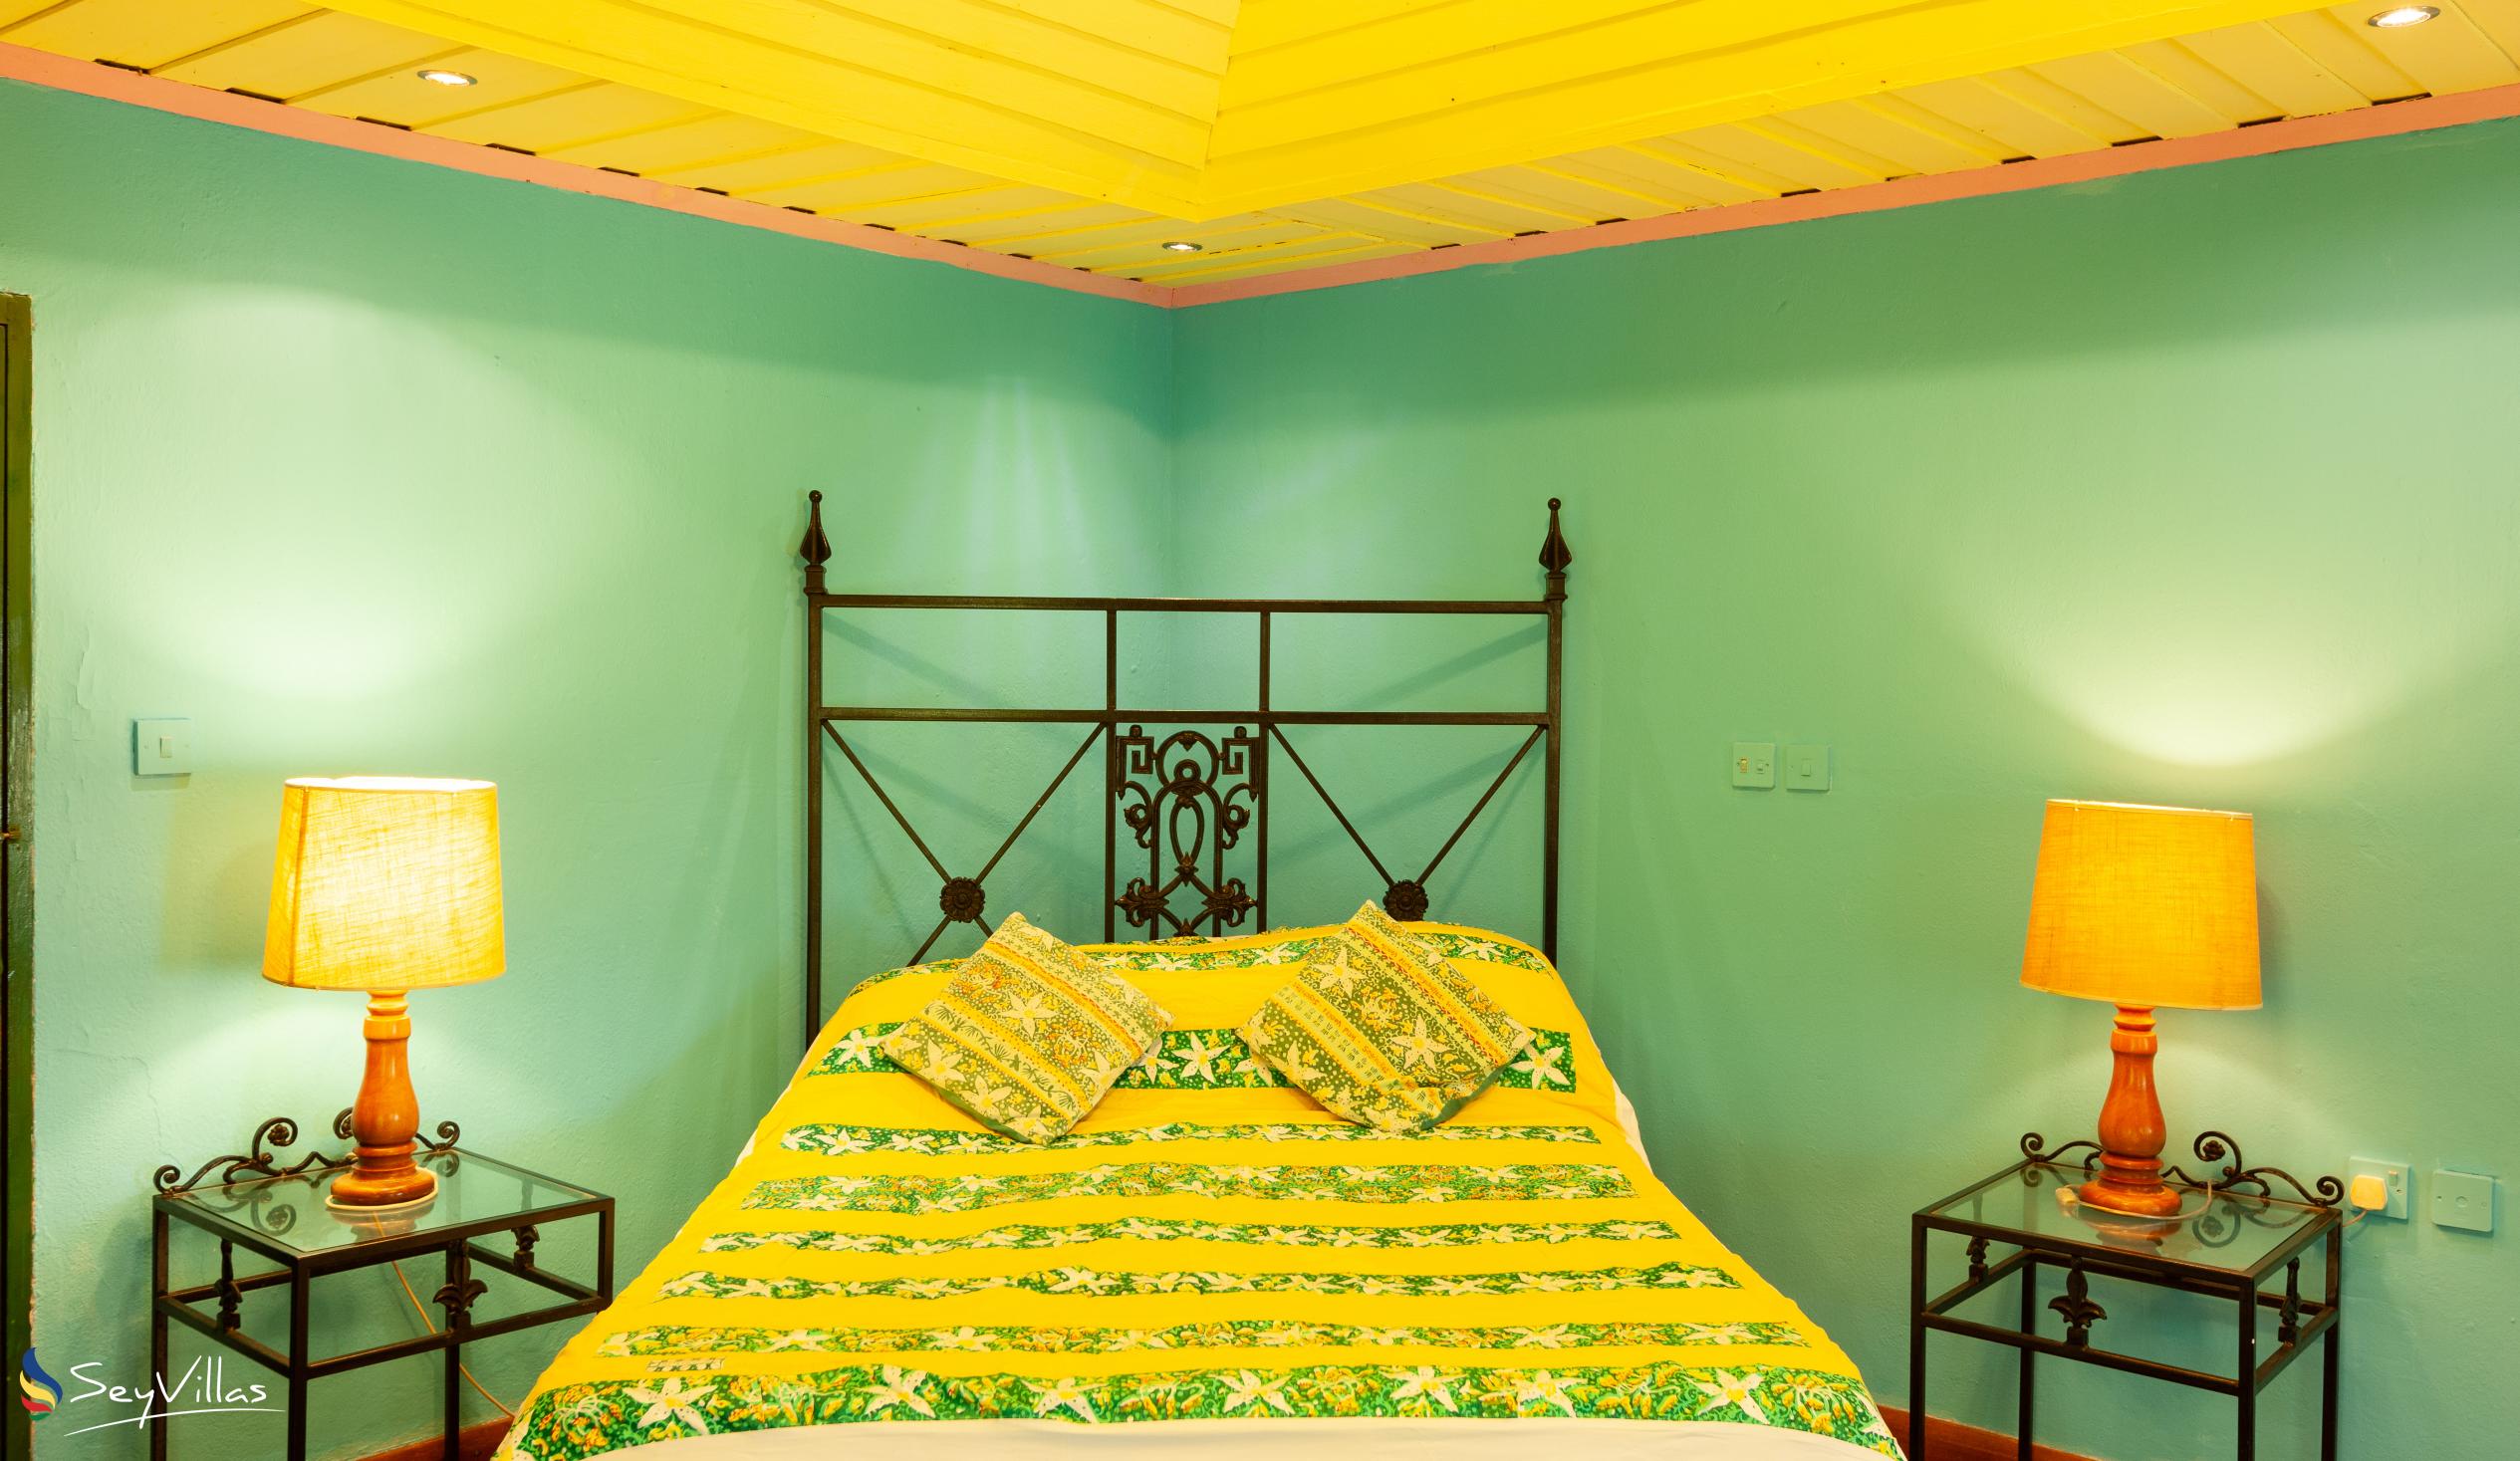 Photo 48: Chauve Souris Relais - Creol Room - Praslin (Seychelles)